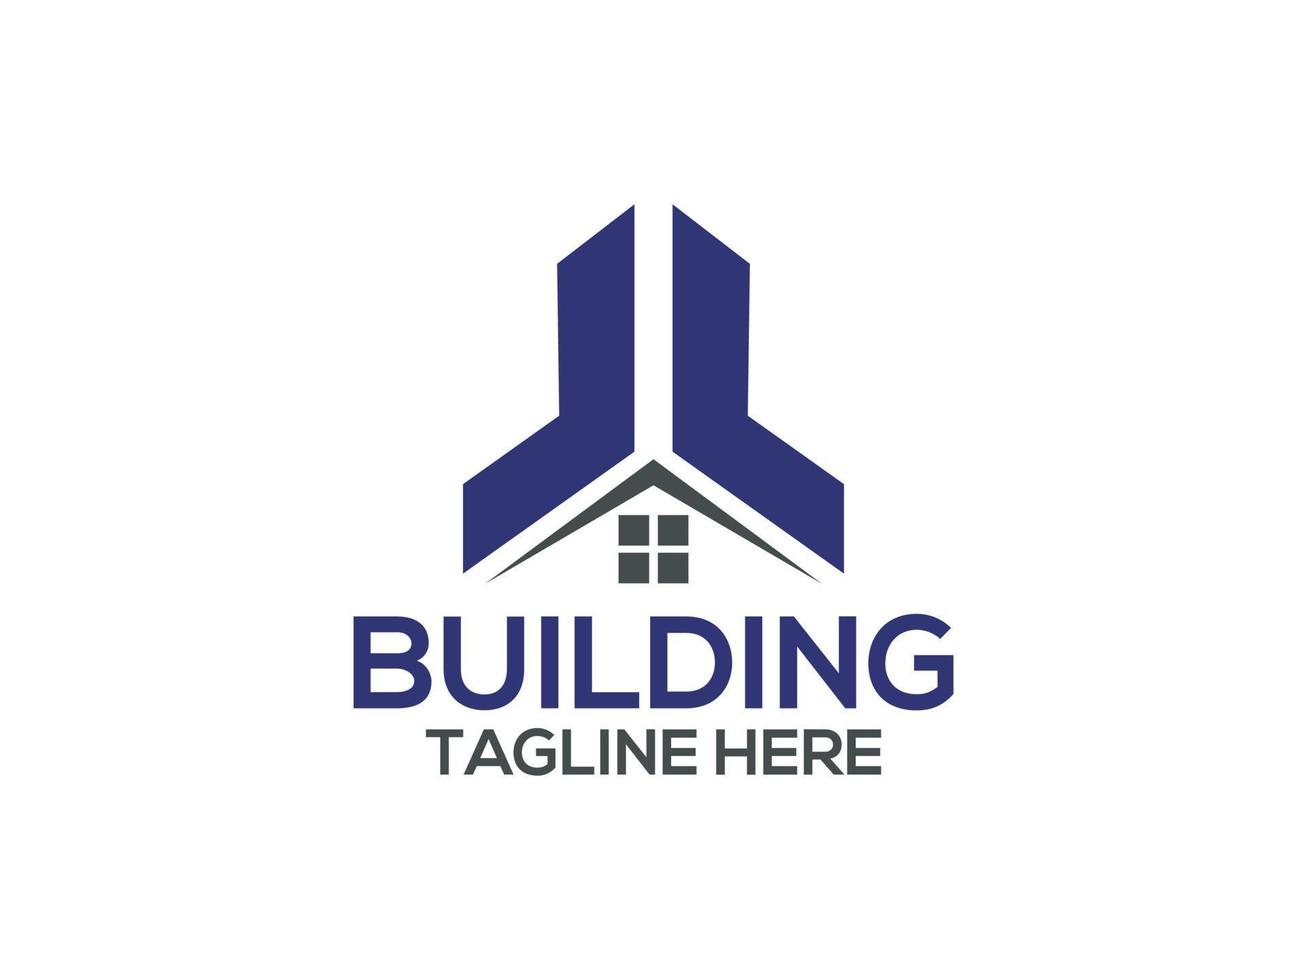 real estate, building and construction logo design vector